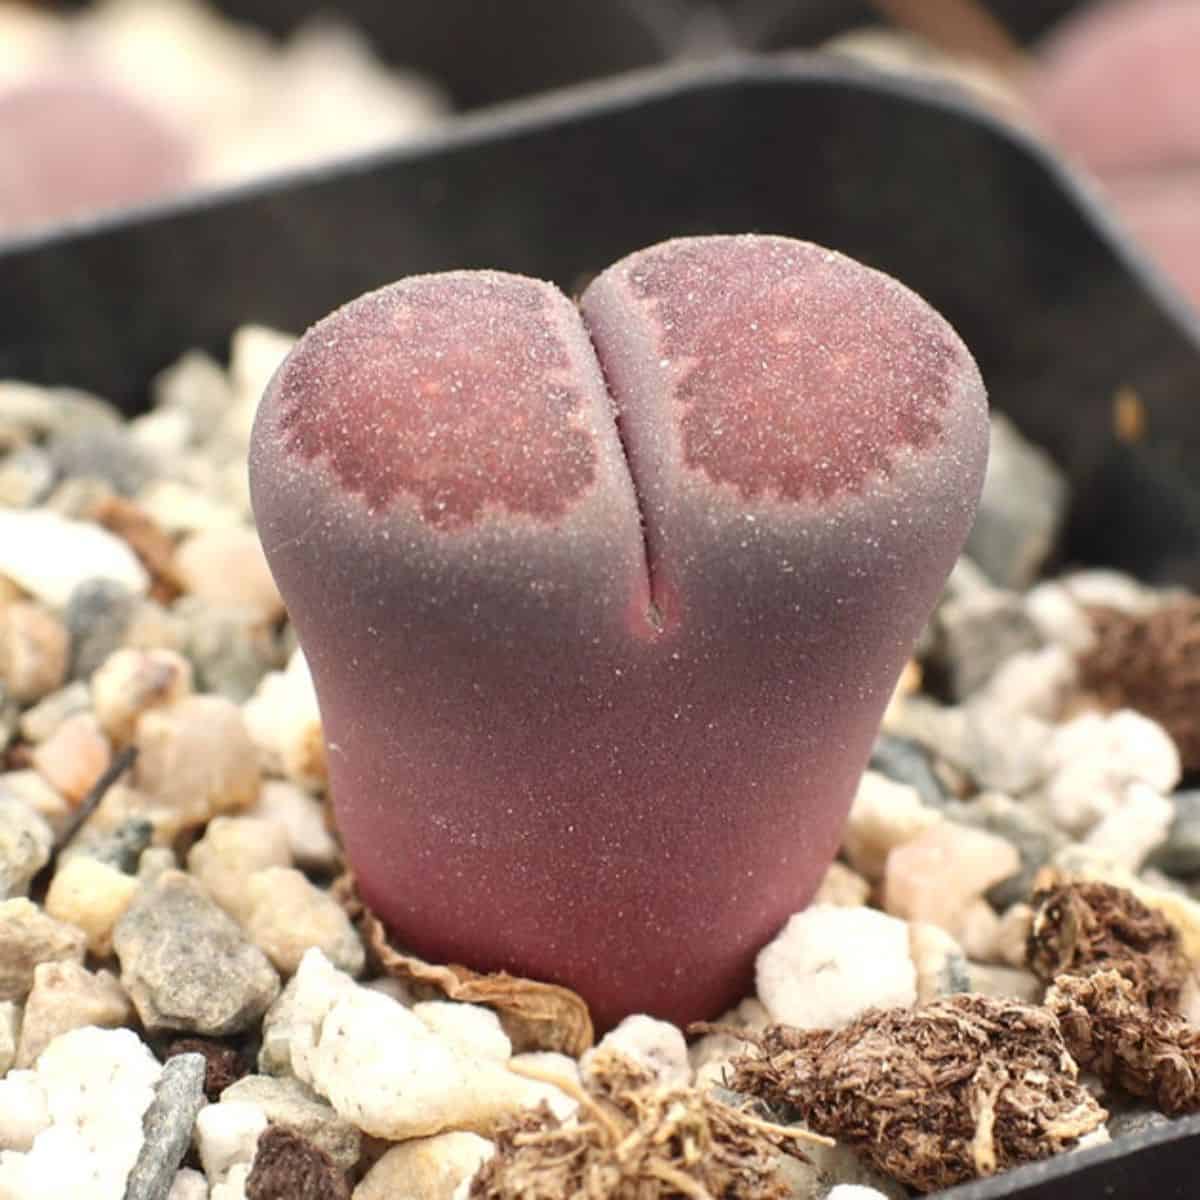 Lithops salicola - Sato's Violet or ‘Bacchus’ growing in a pot.